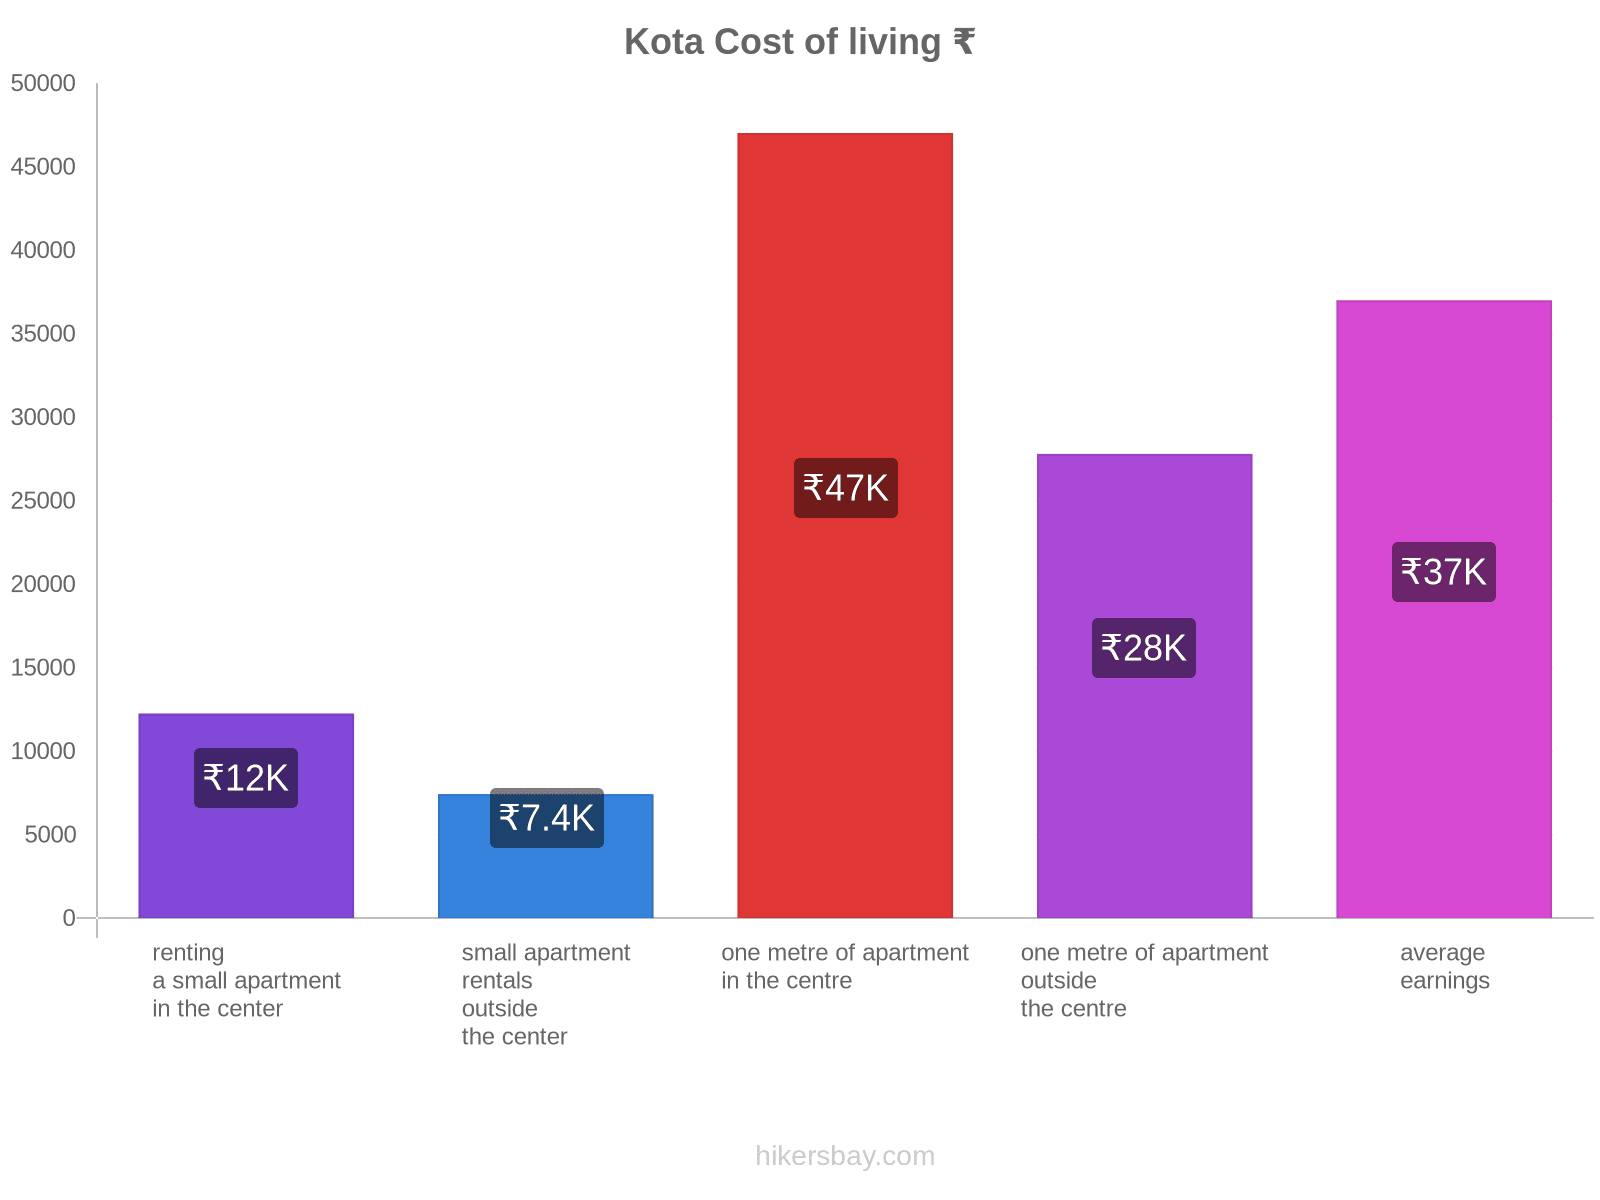 Kota cost of living hikersbay.com